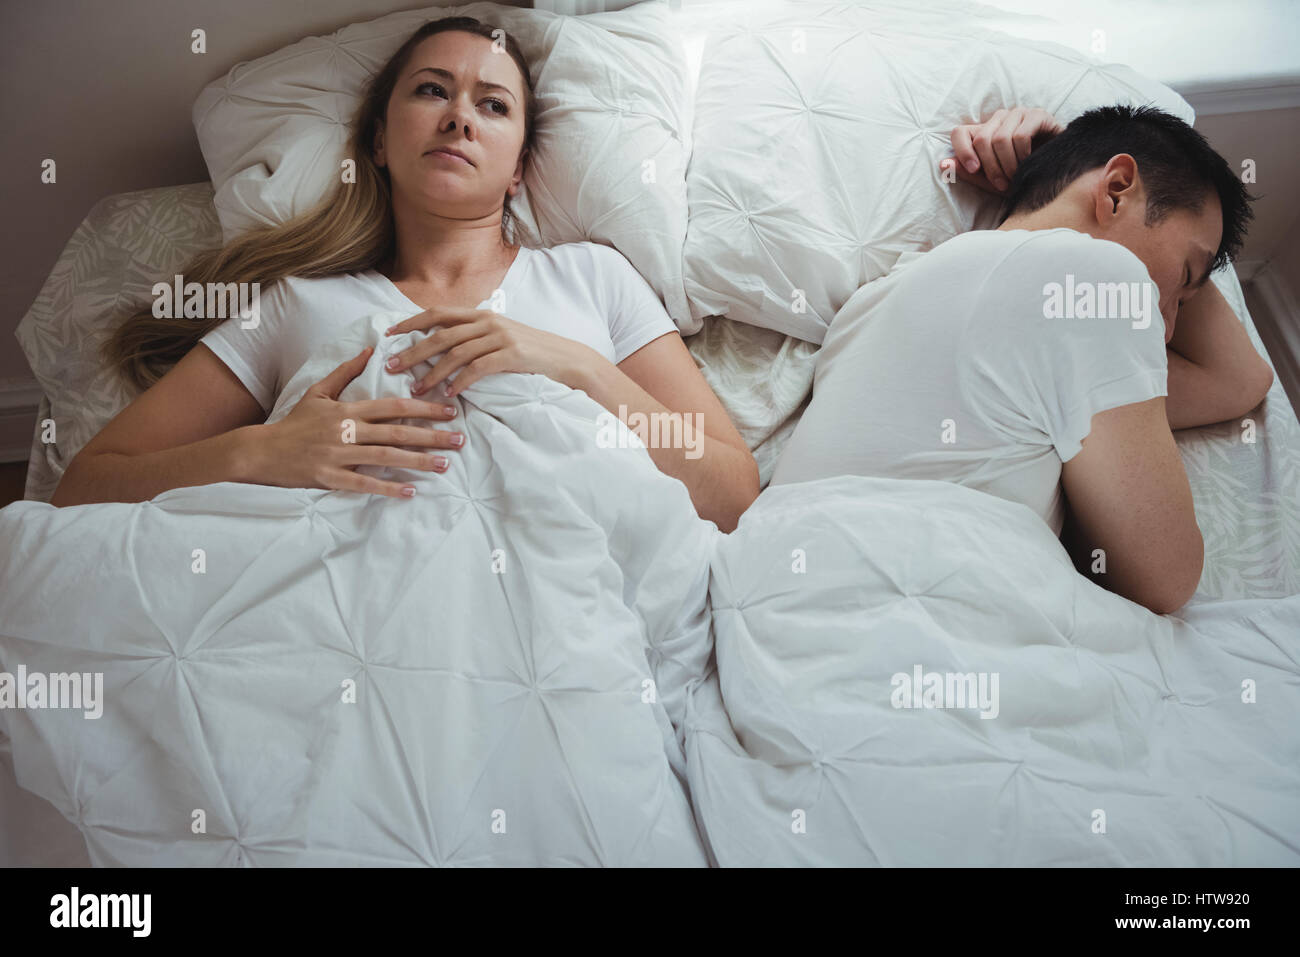 Worried woman lying while man sleeping beside her in bedroom Stock Photo